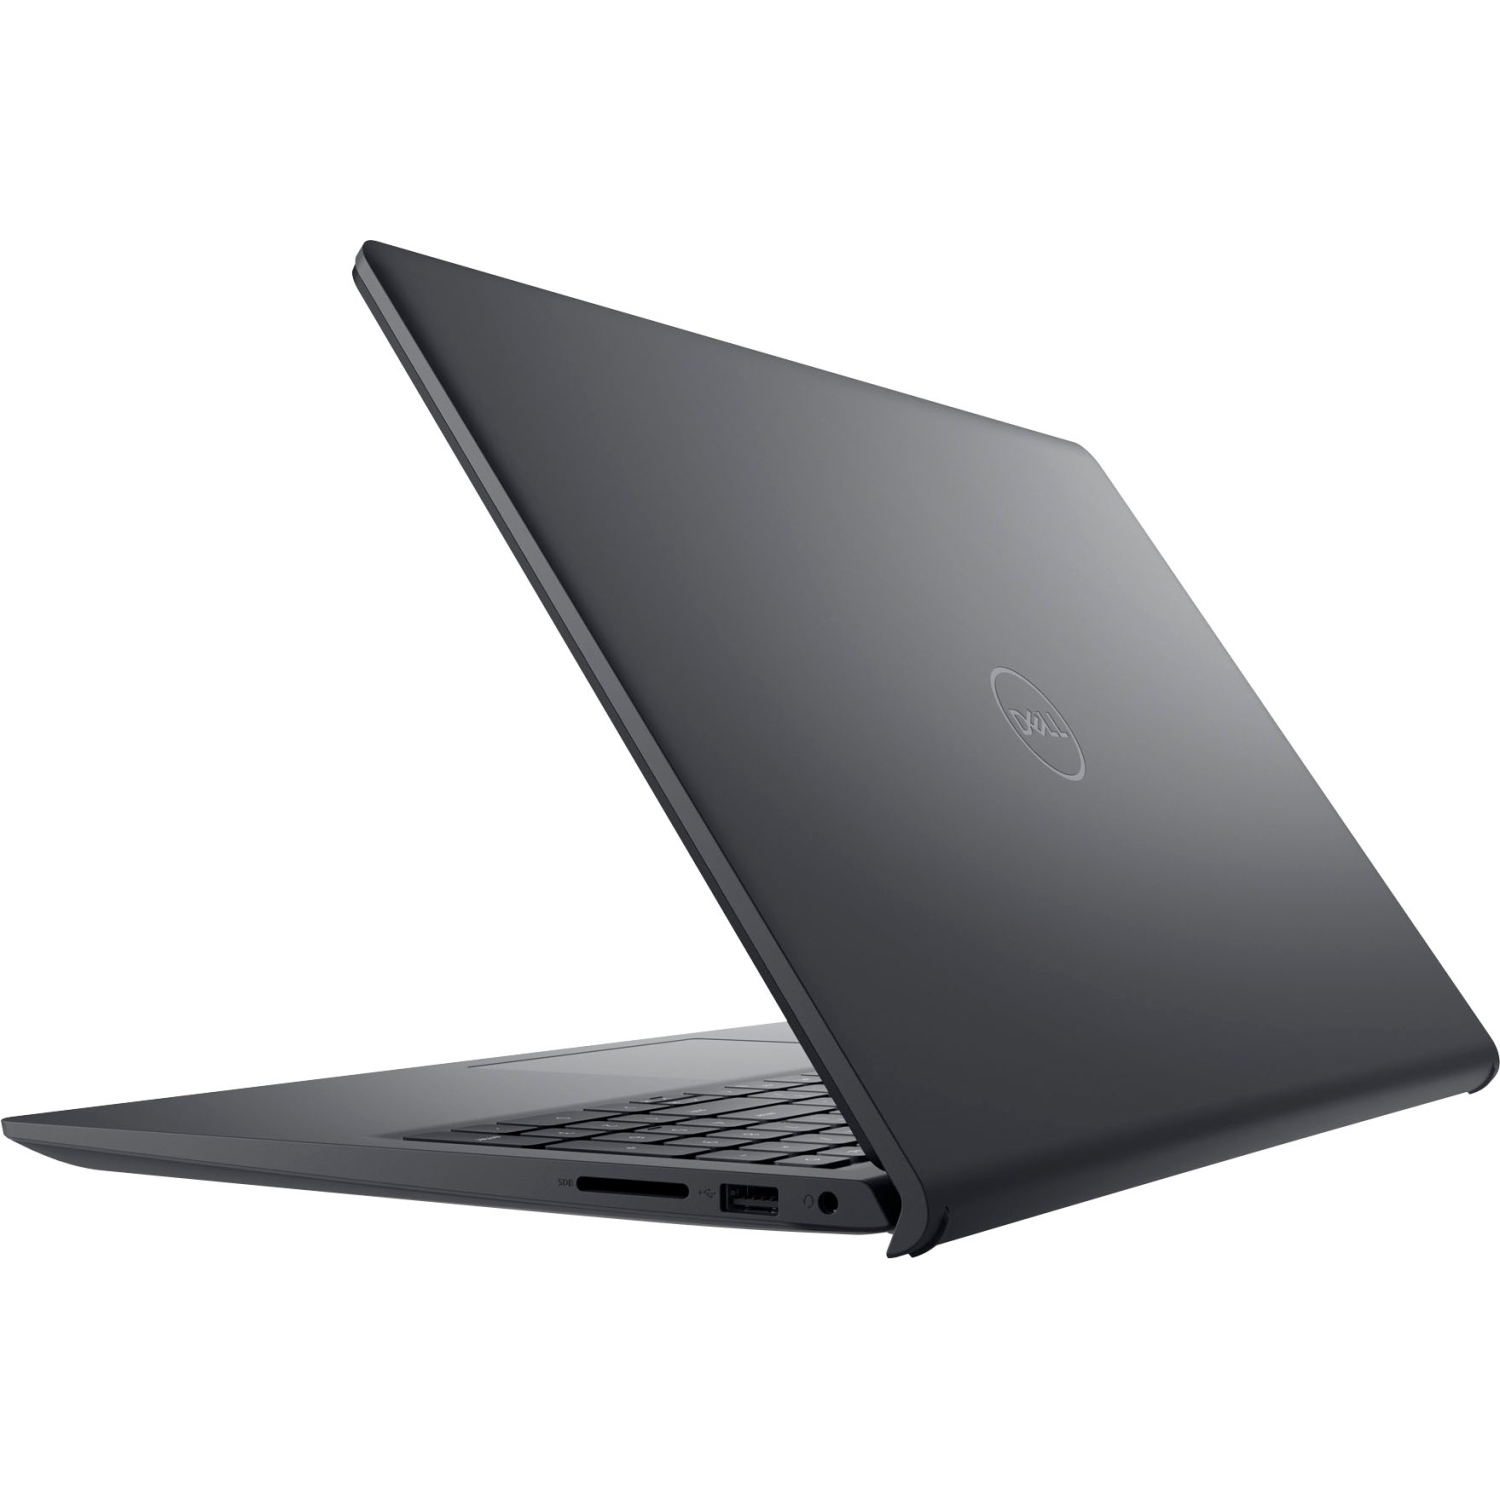 Dell Inspiron 15 3511 15.6" FHD Touch Laptop (Intel Core i5-1035G1, 8GB RAM, 256GB SSD, Windows 11 S Mode) - Black (i3511-5174BLK-PUS)